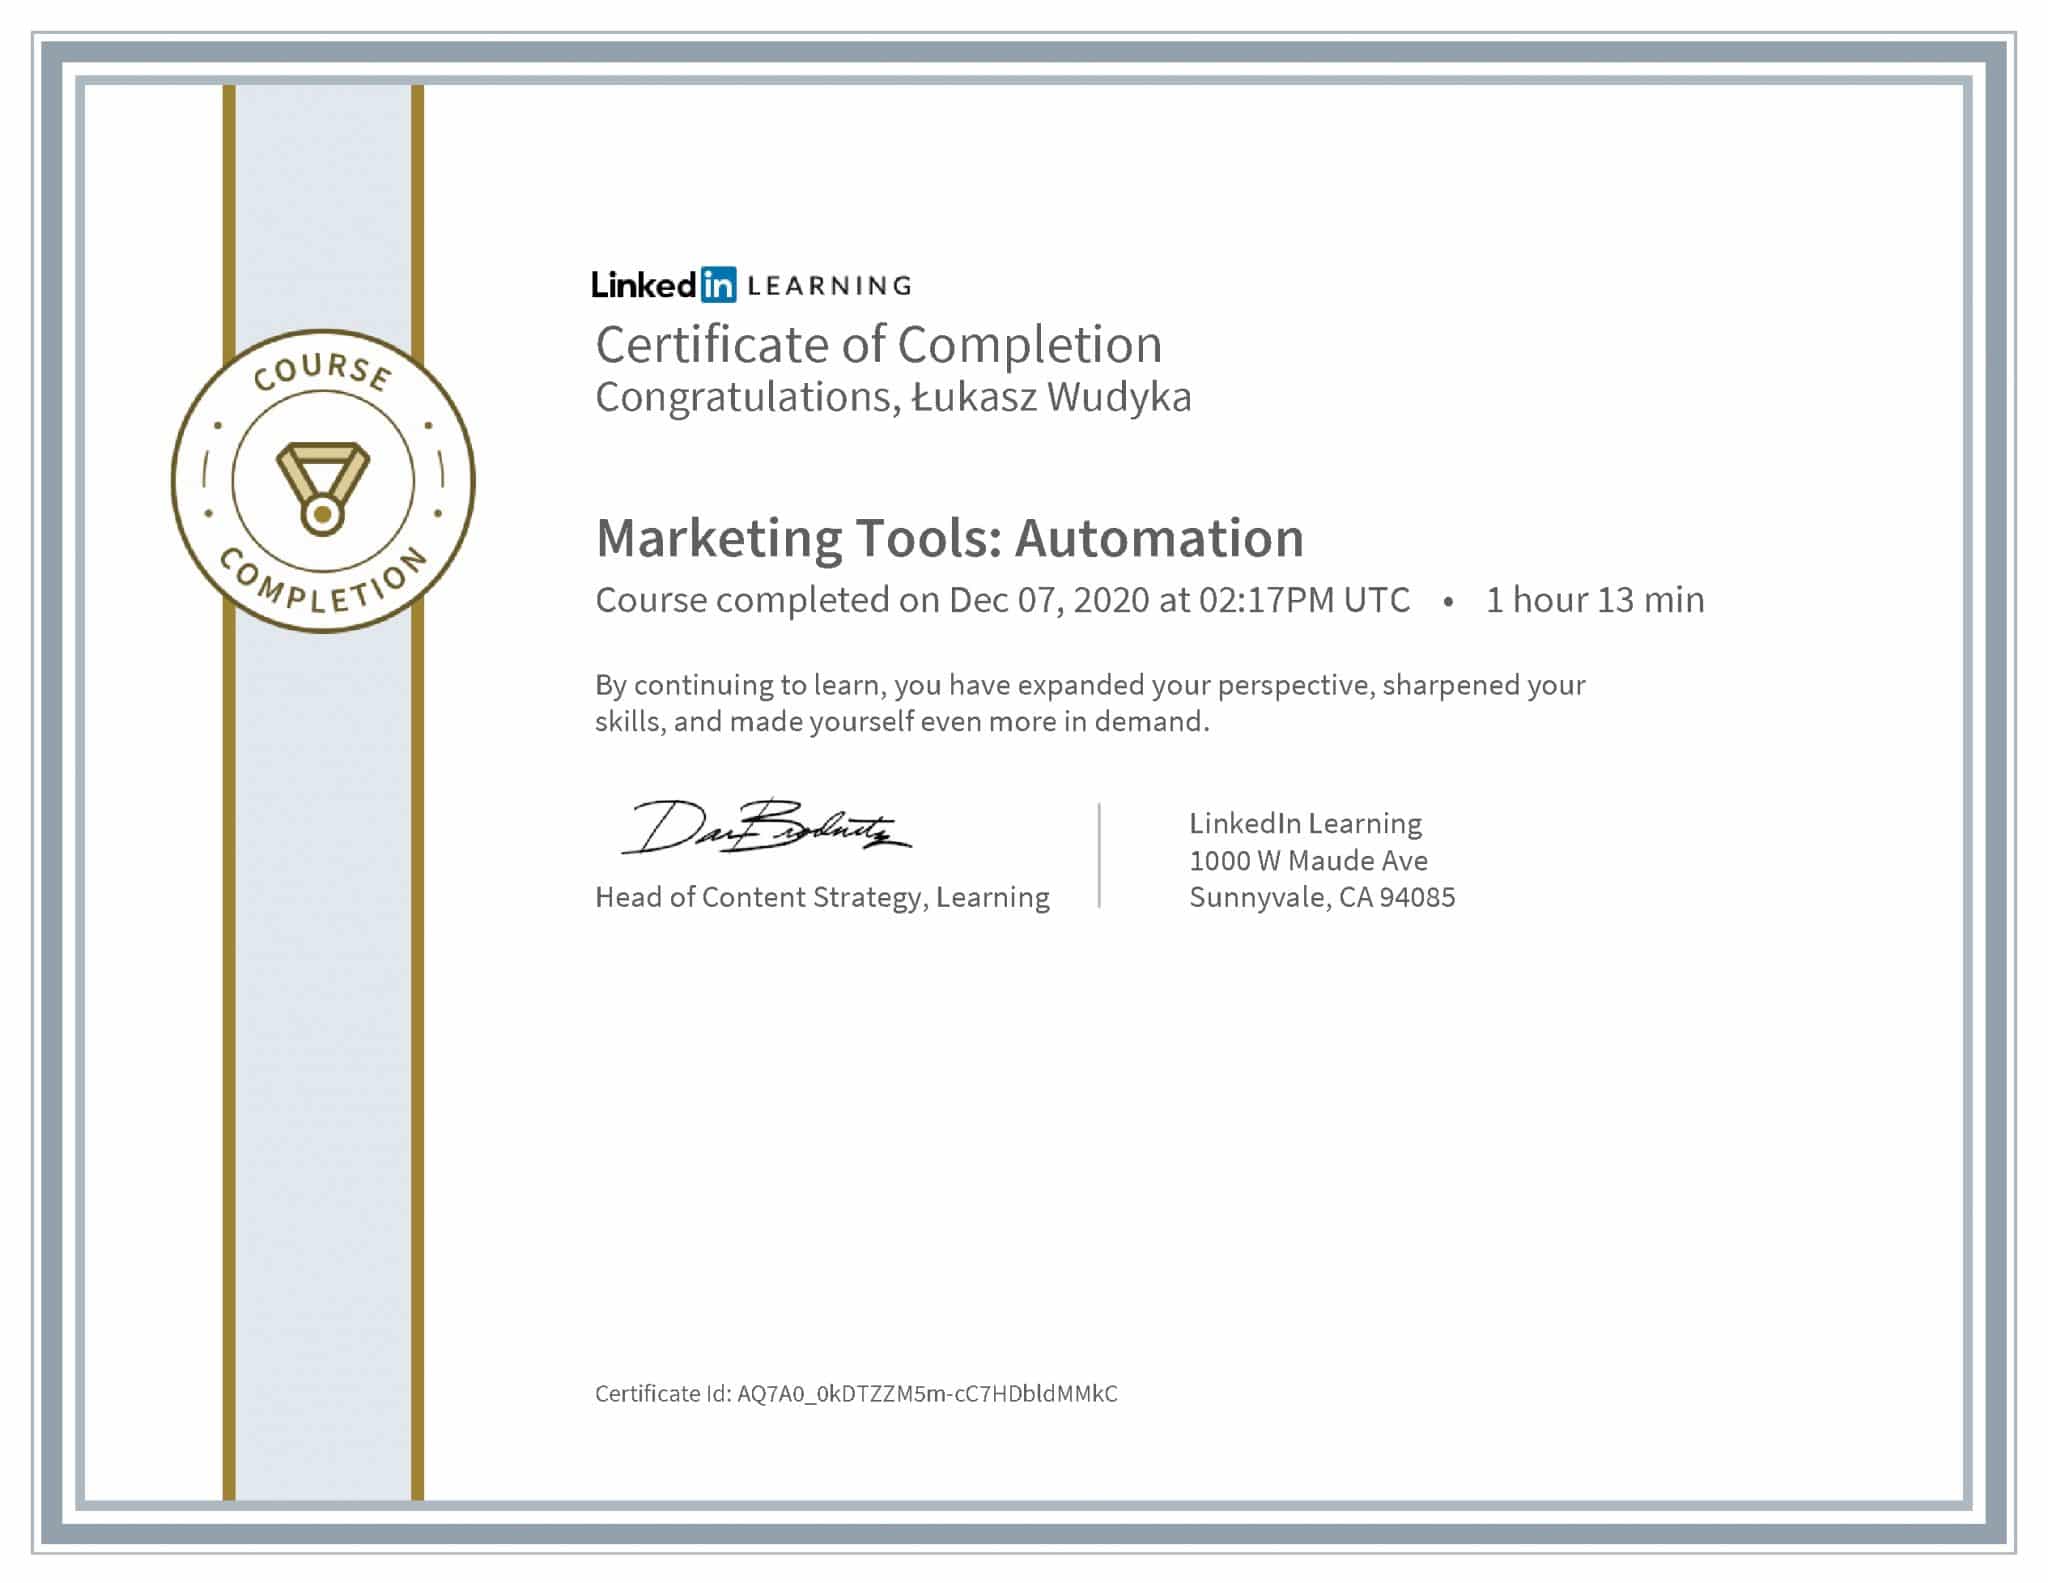 Łukasz Wudyka certyfikat LinkedIn Marketing Tools: Automation